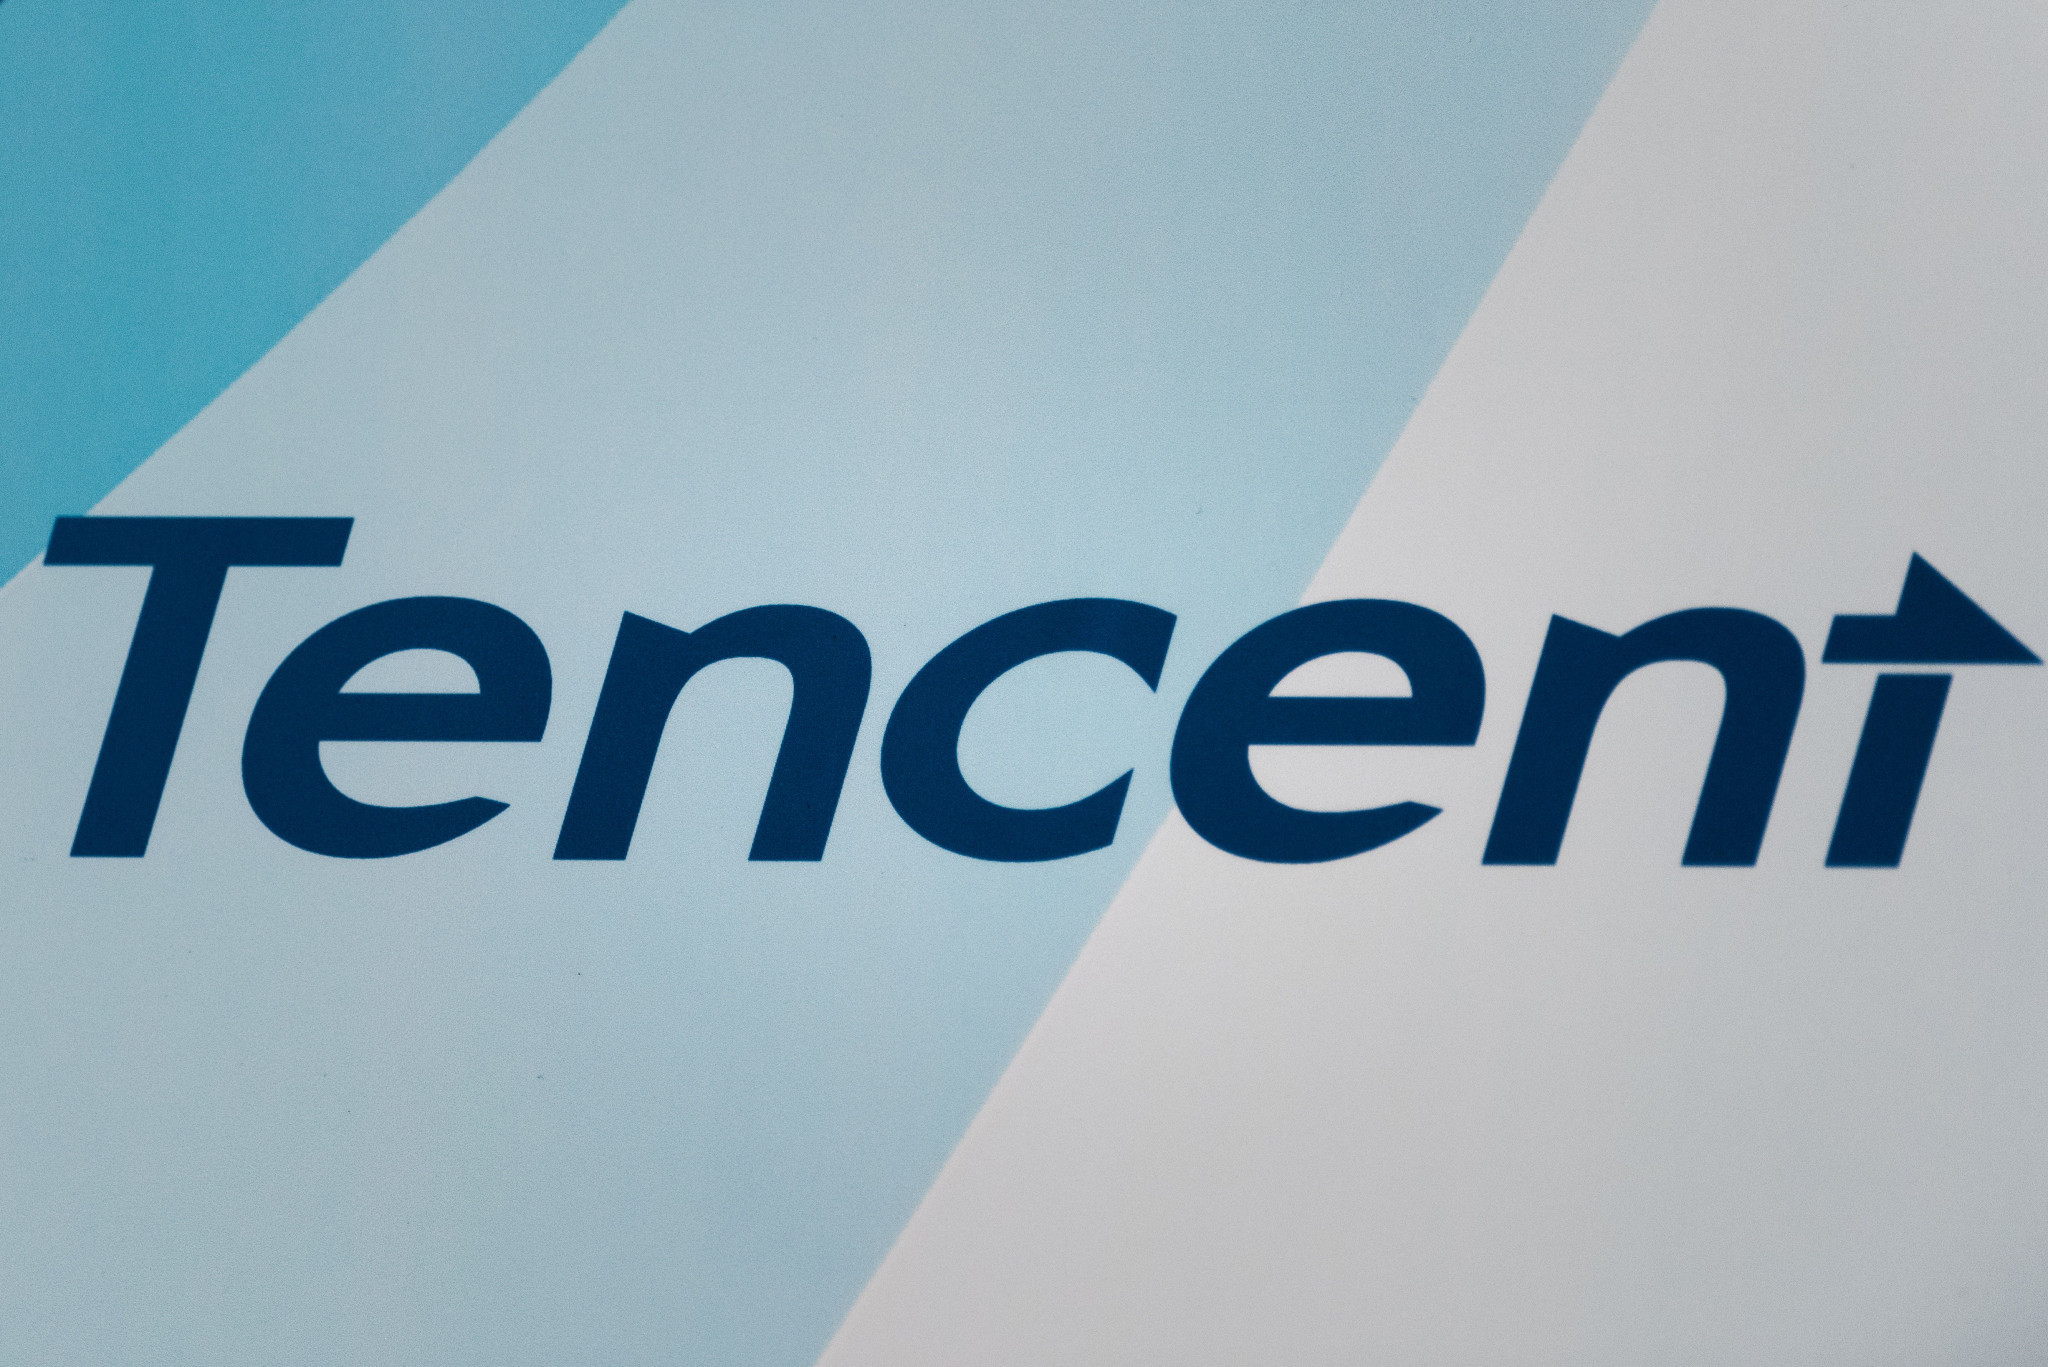 Chengdu 2021 sponsor Tencent unveils solid financial performance